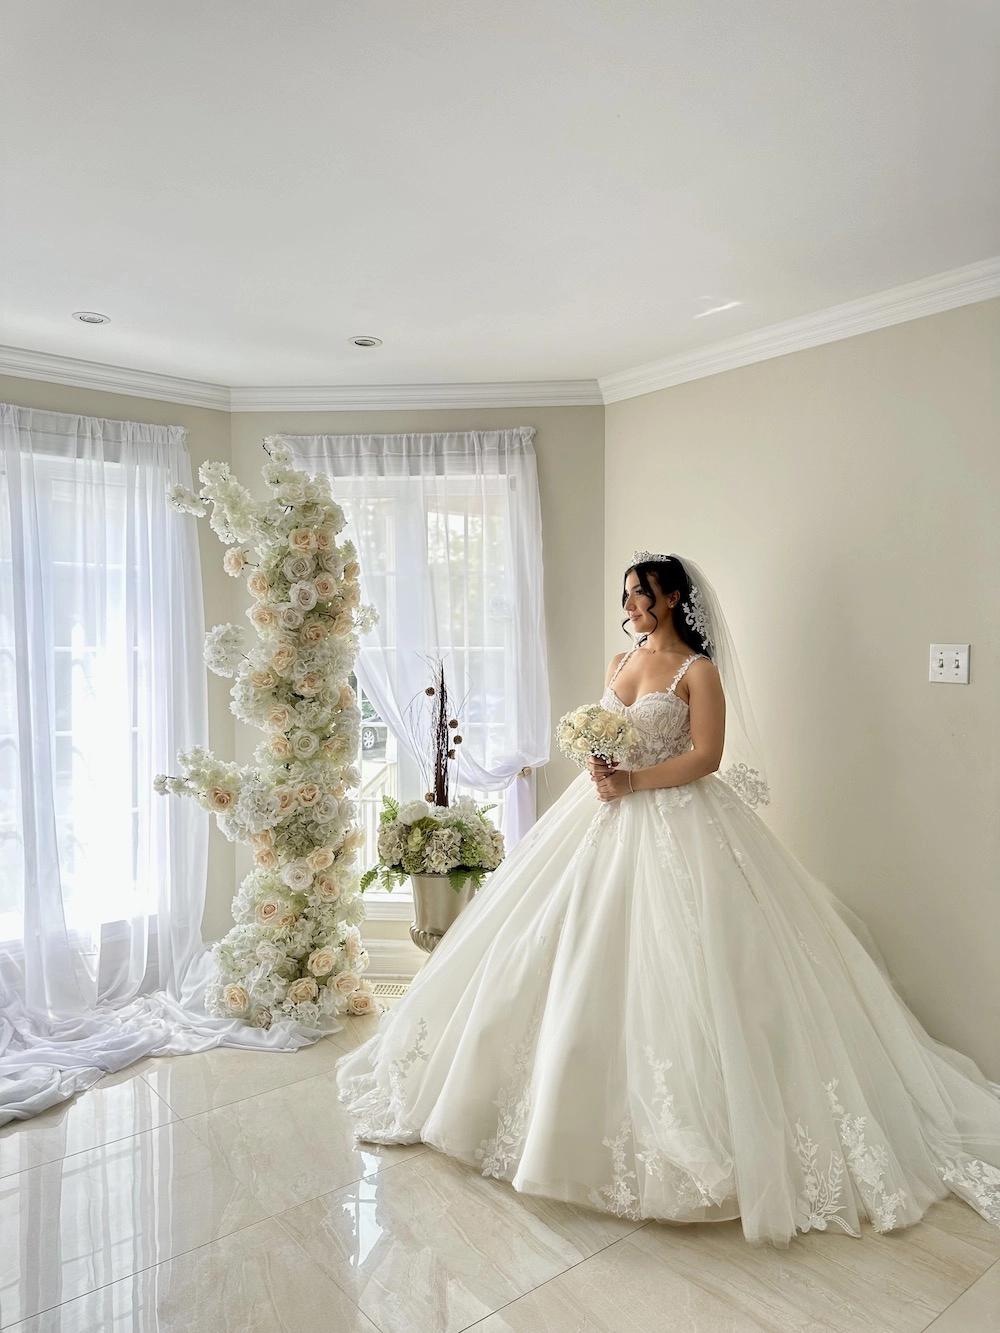 Julia Wears Lace Ballgown Wedding Dress. Desktop Image